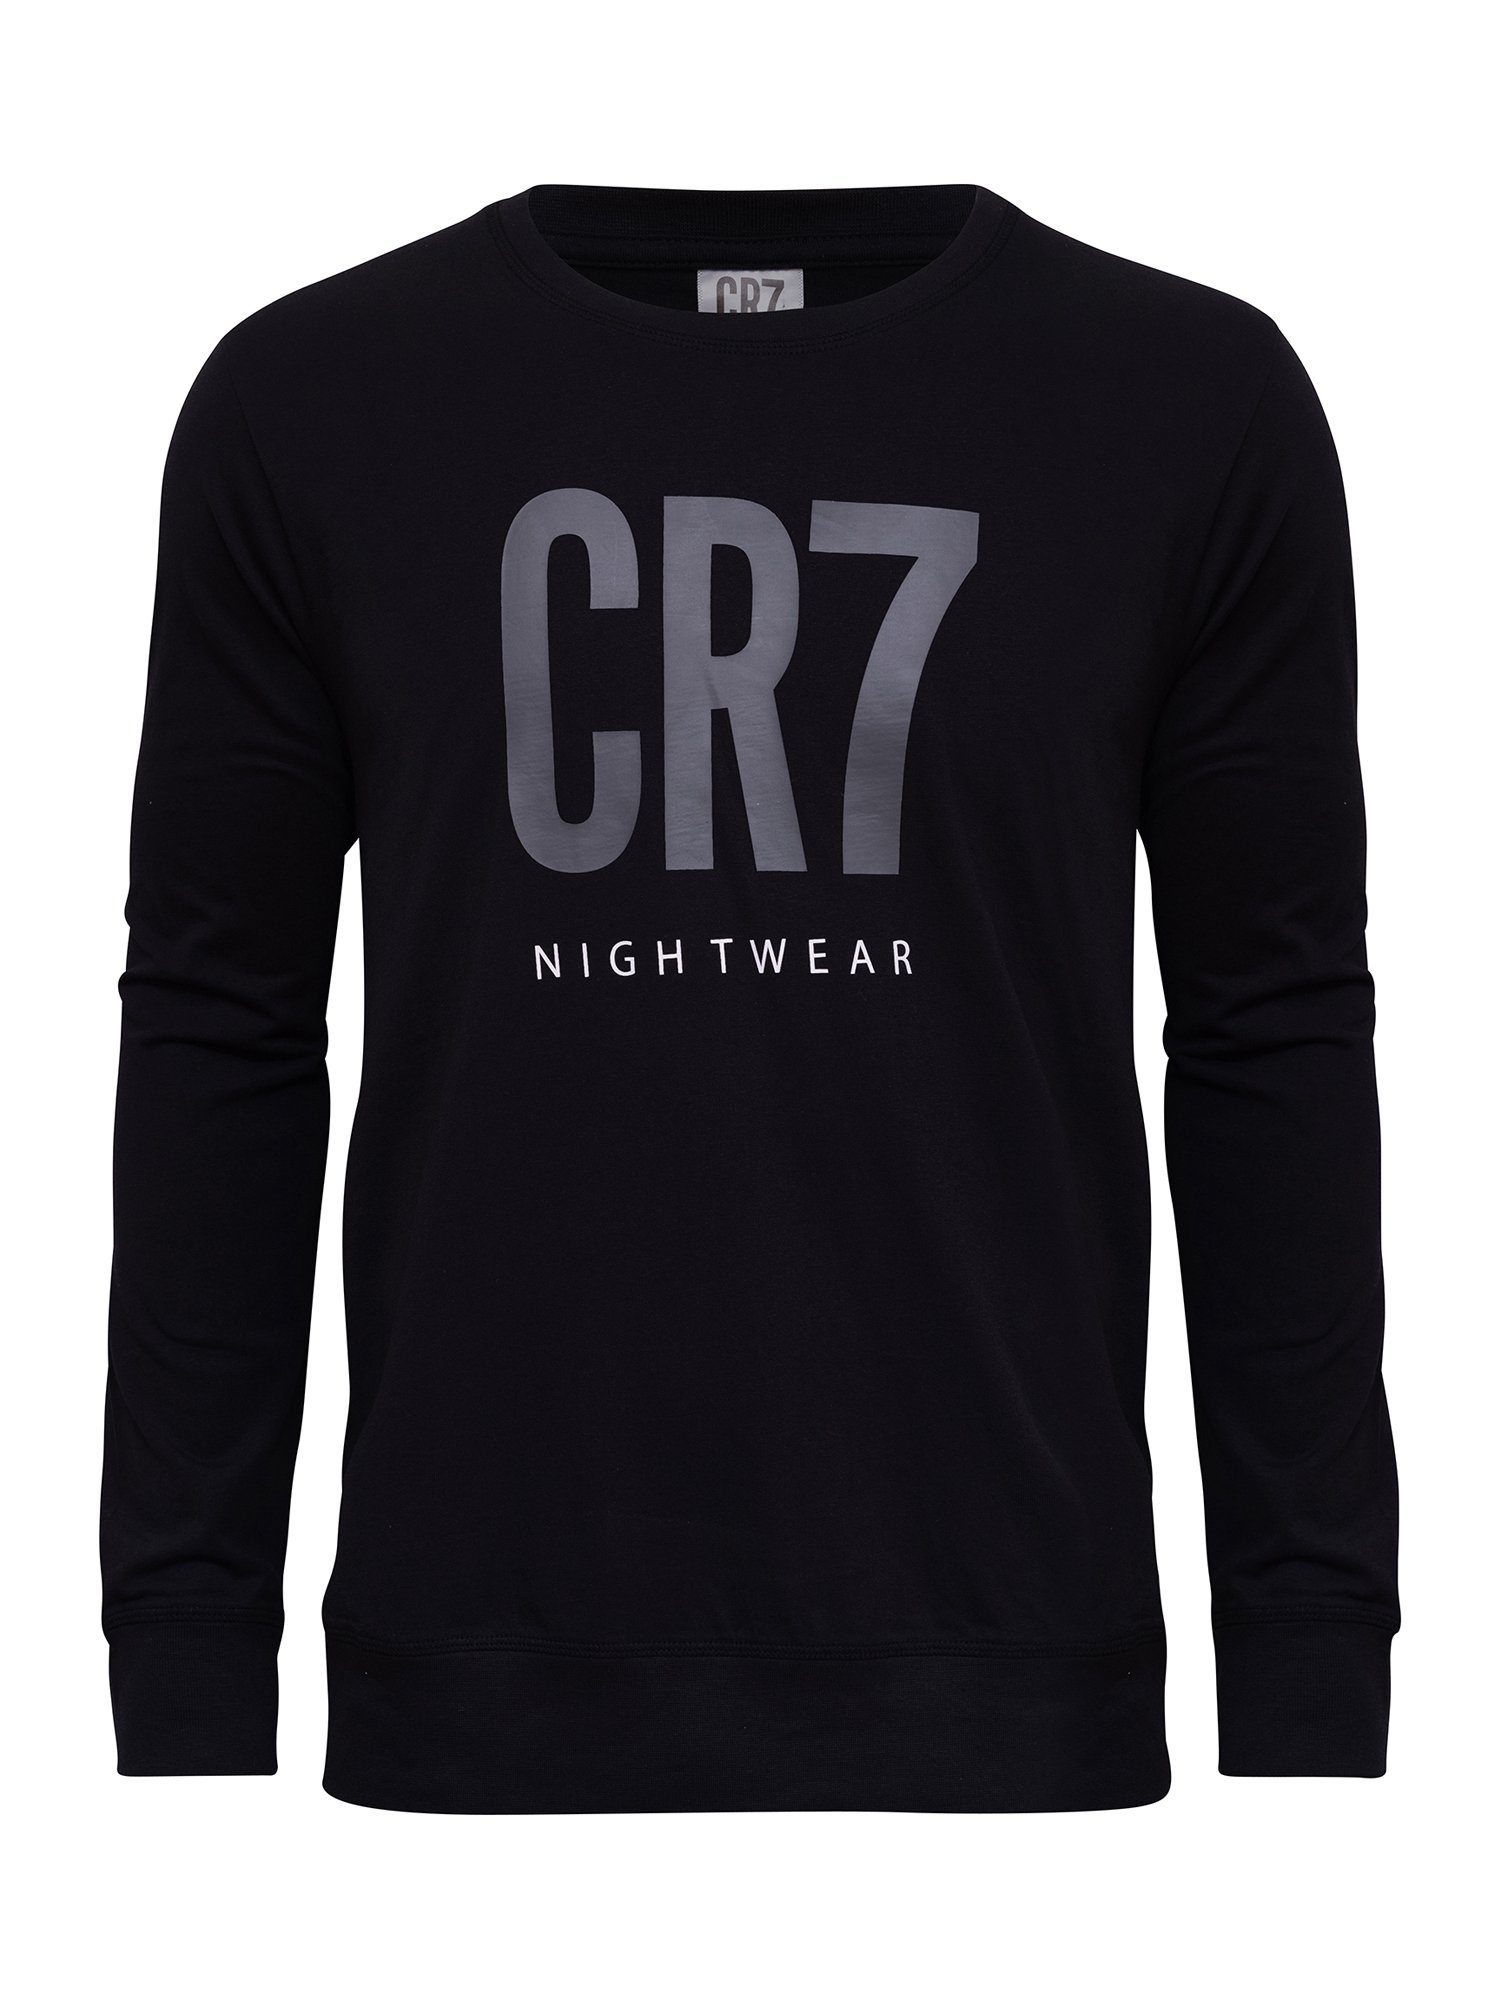 schwarz2 (1 Homewear CR7 tlg) Pyjama